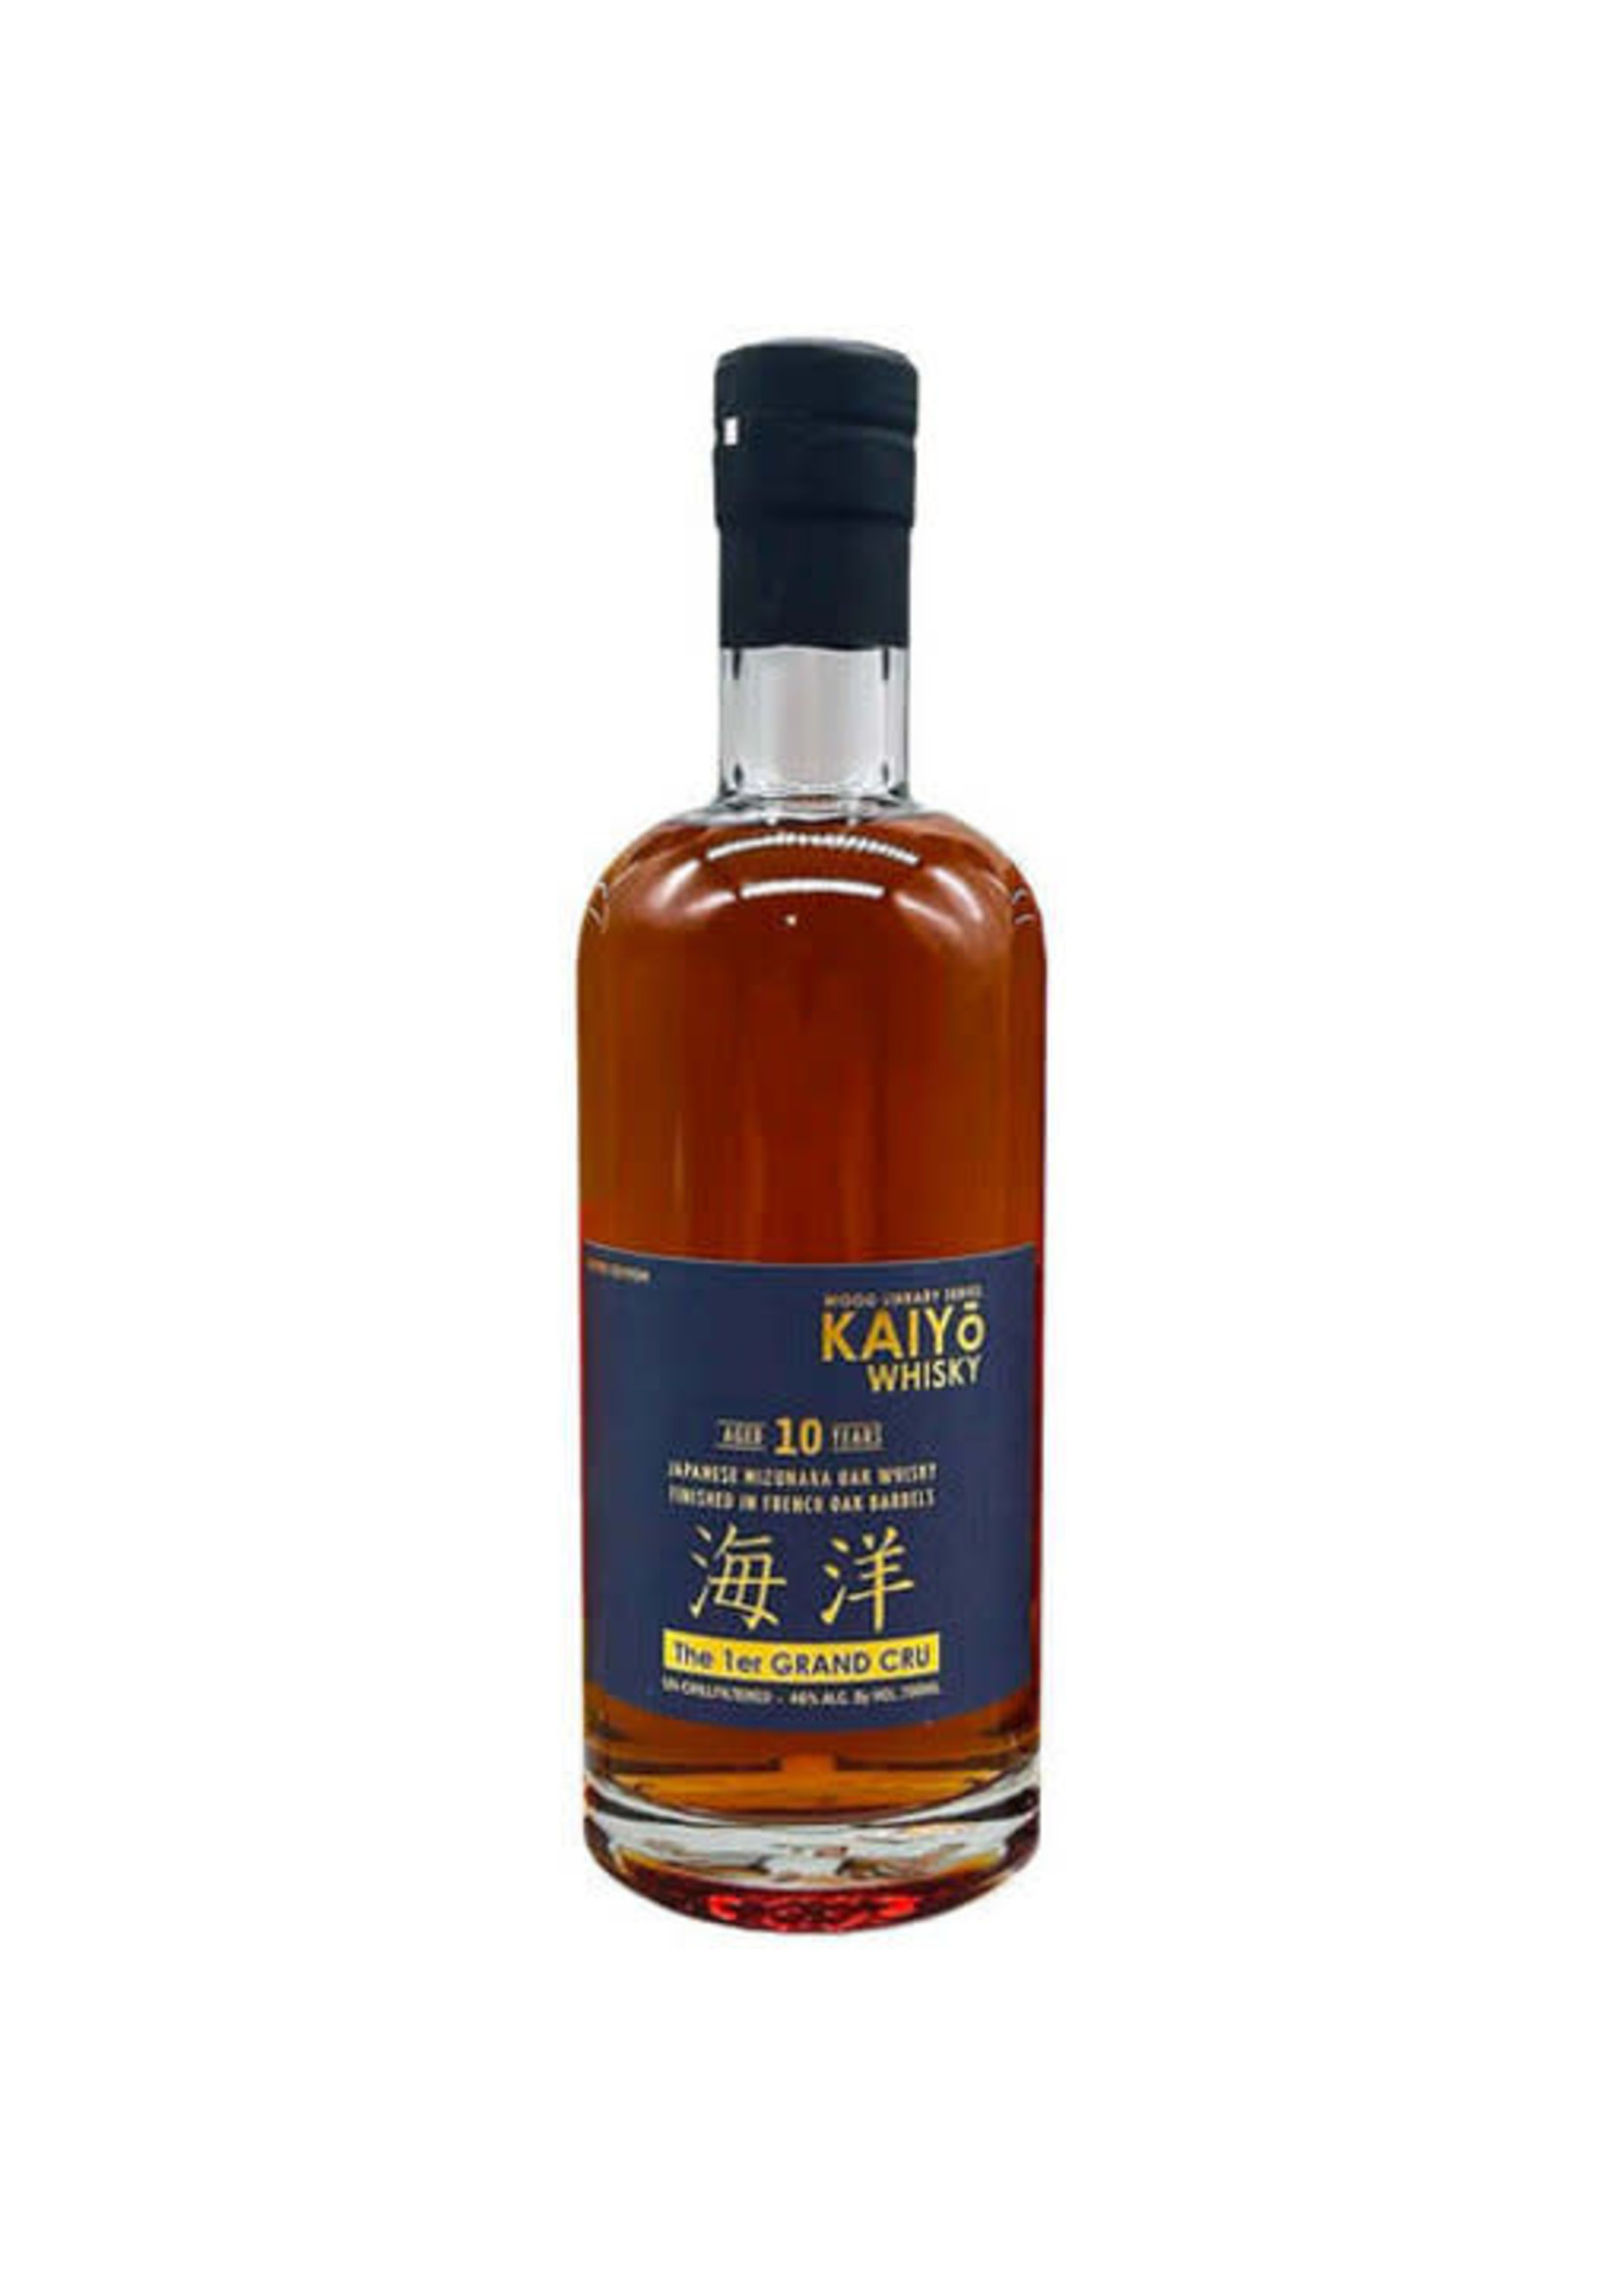 Kaiyo Whisky Kaiyo Whisky / 10 Year Grand Cru Japanese Mizunara Oak Whisky Finished in French Oak Casks 46% / 700mL